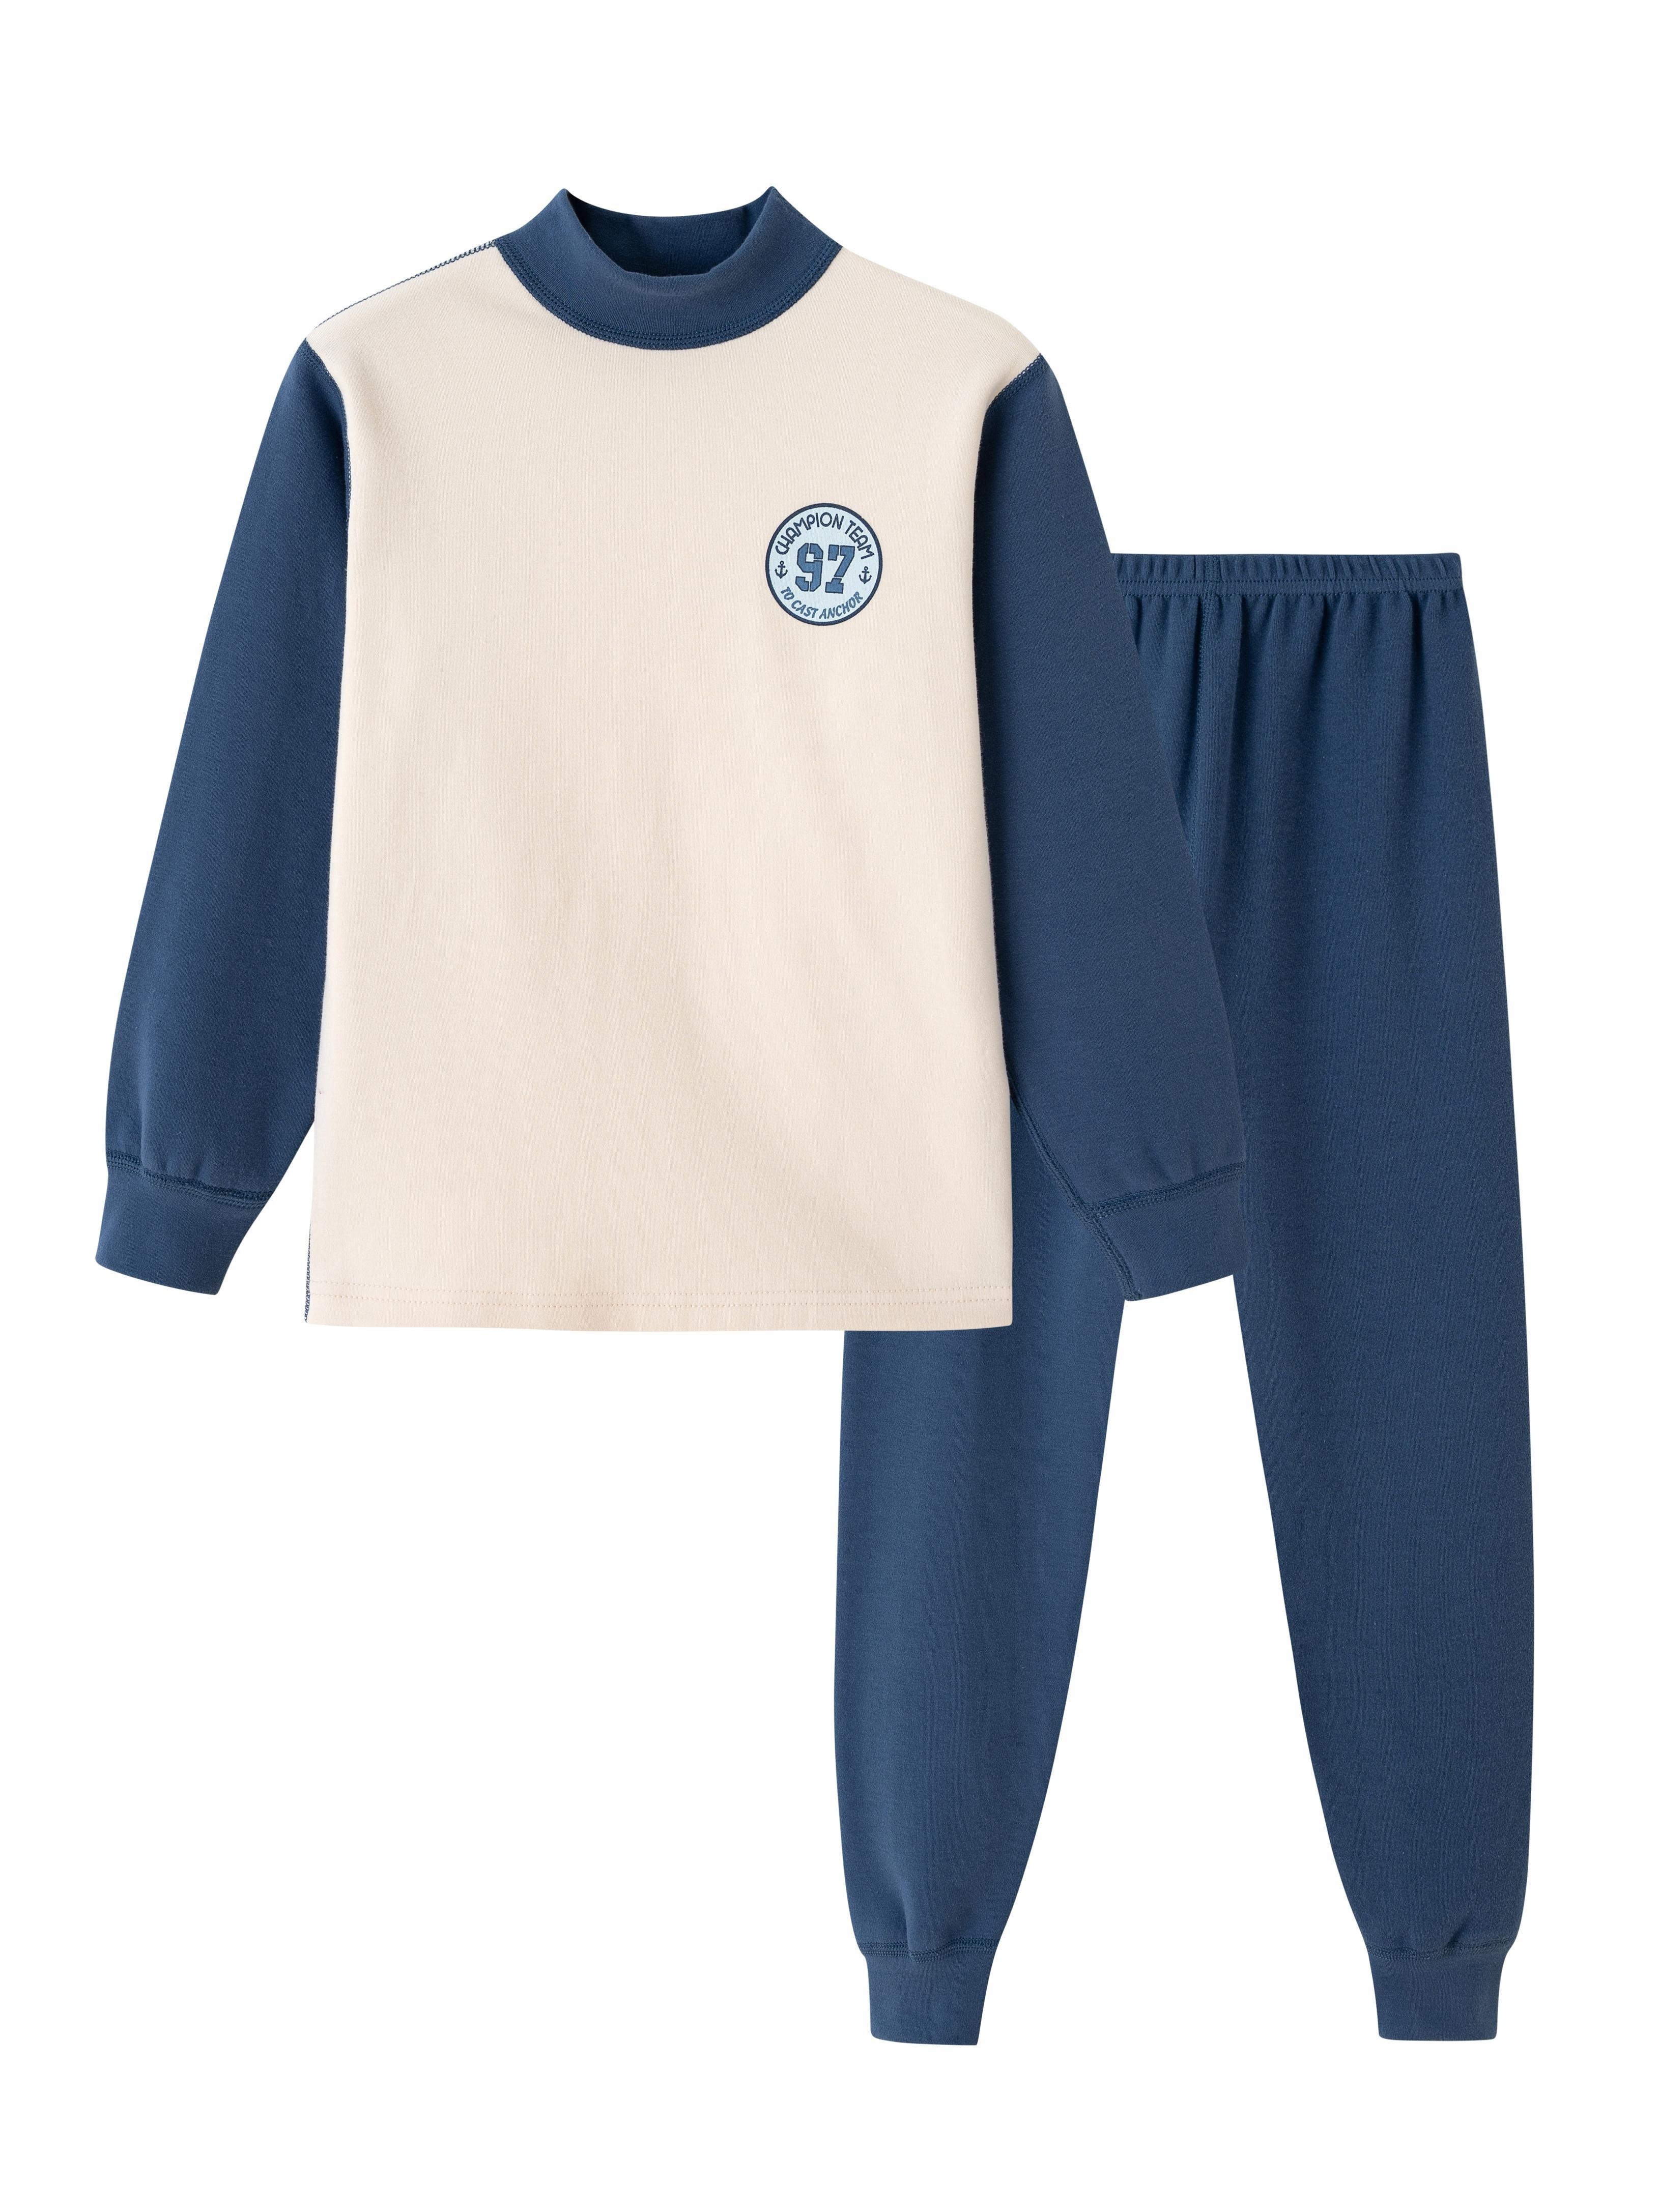 Personalised Children's Pyjamas, Kid's Loungewear Set, Unisex